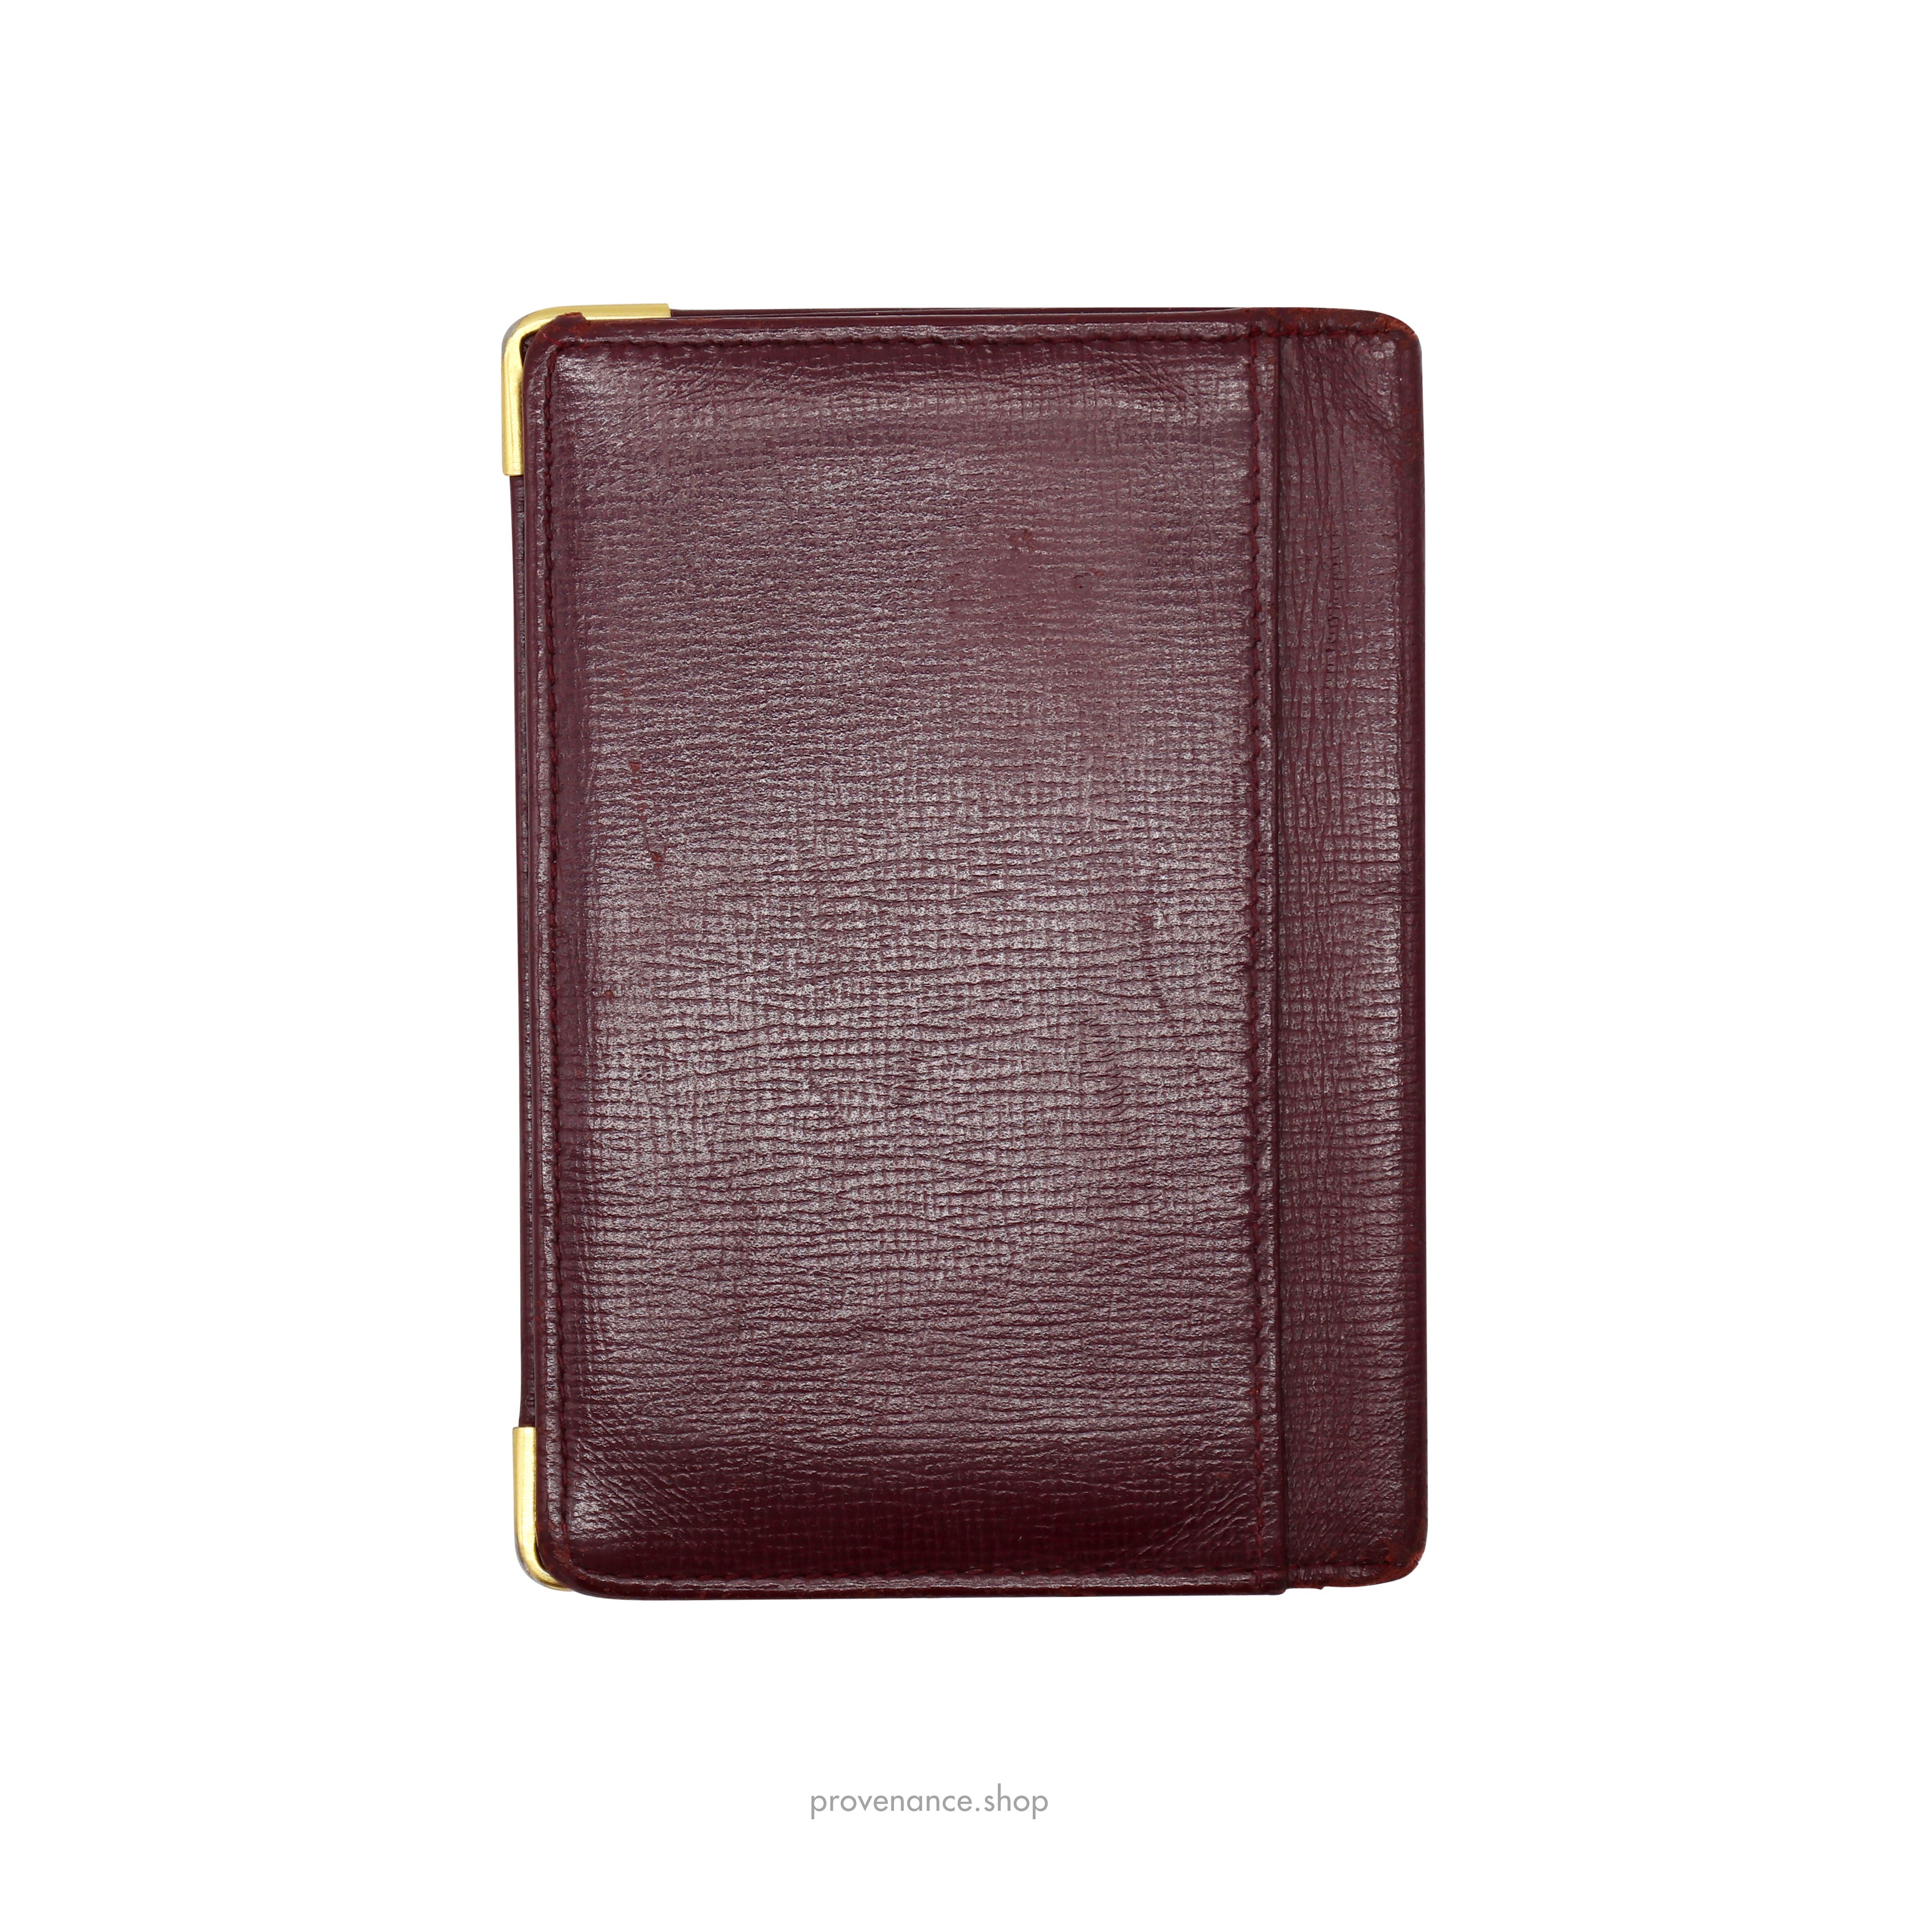 Pocket Organizer Wallet - Burgundy Leather - 2